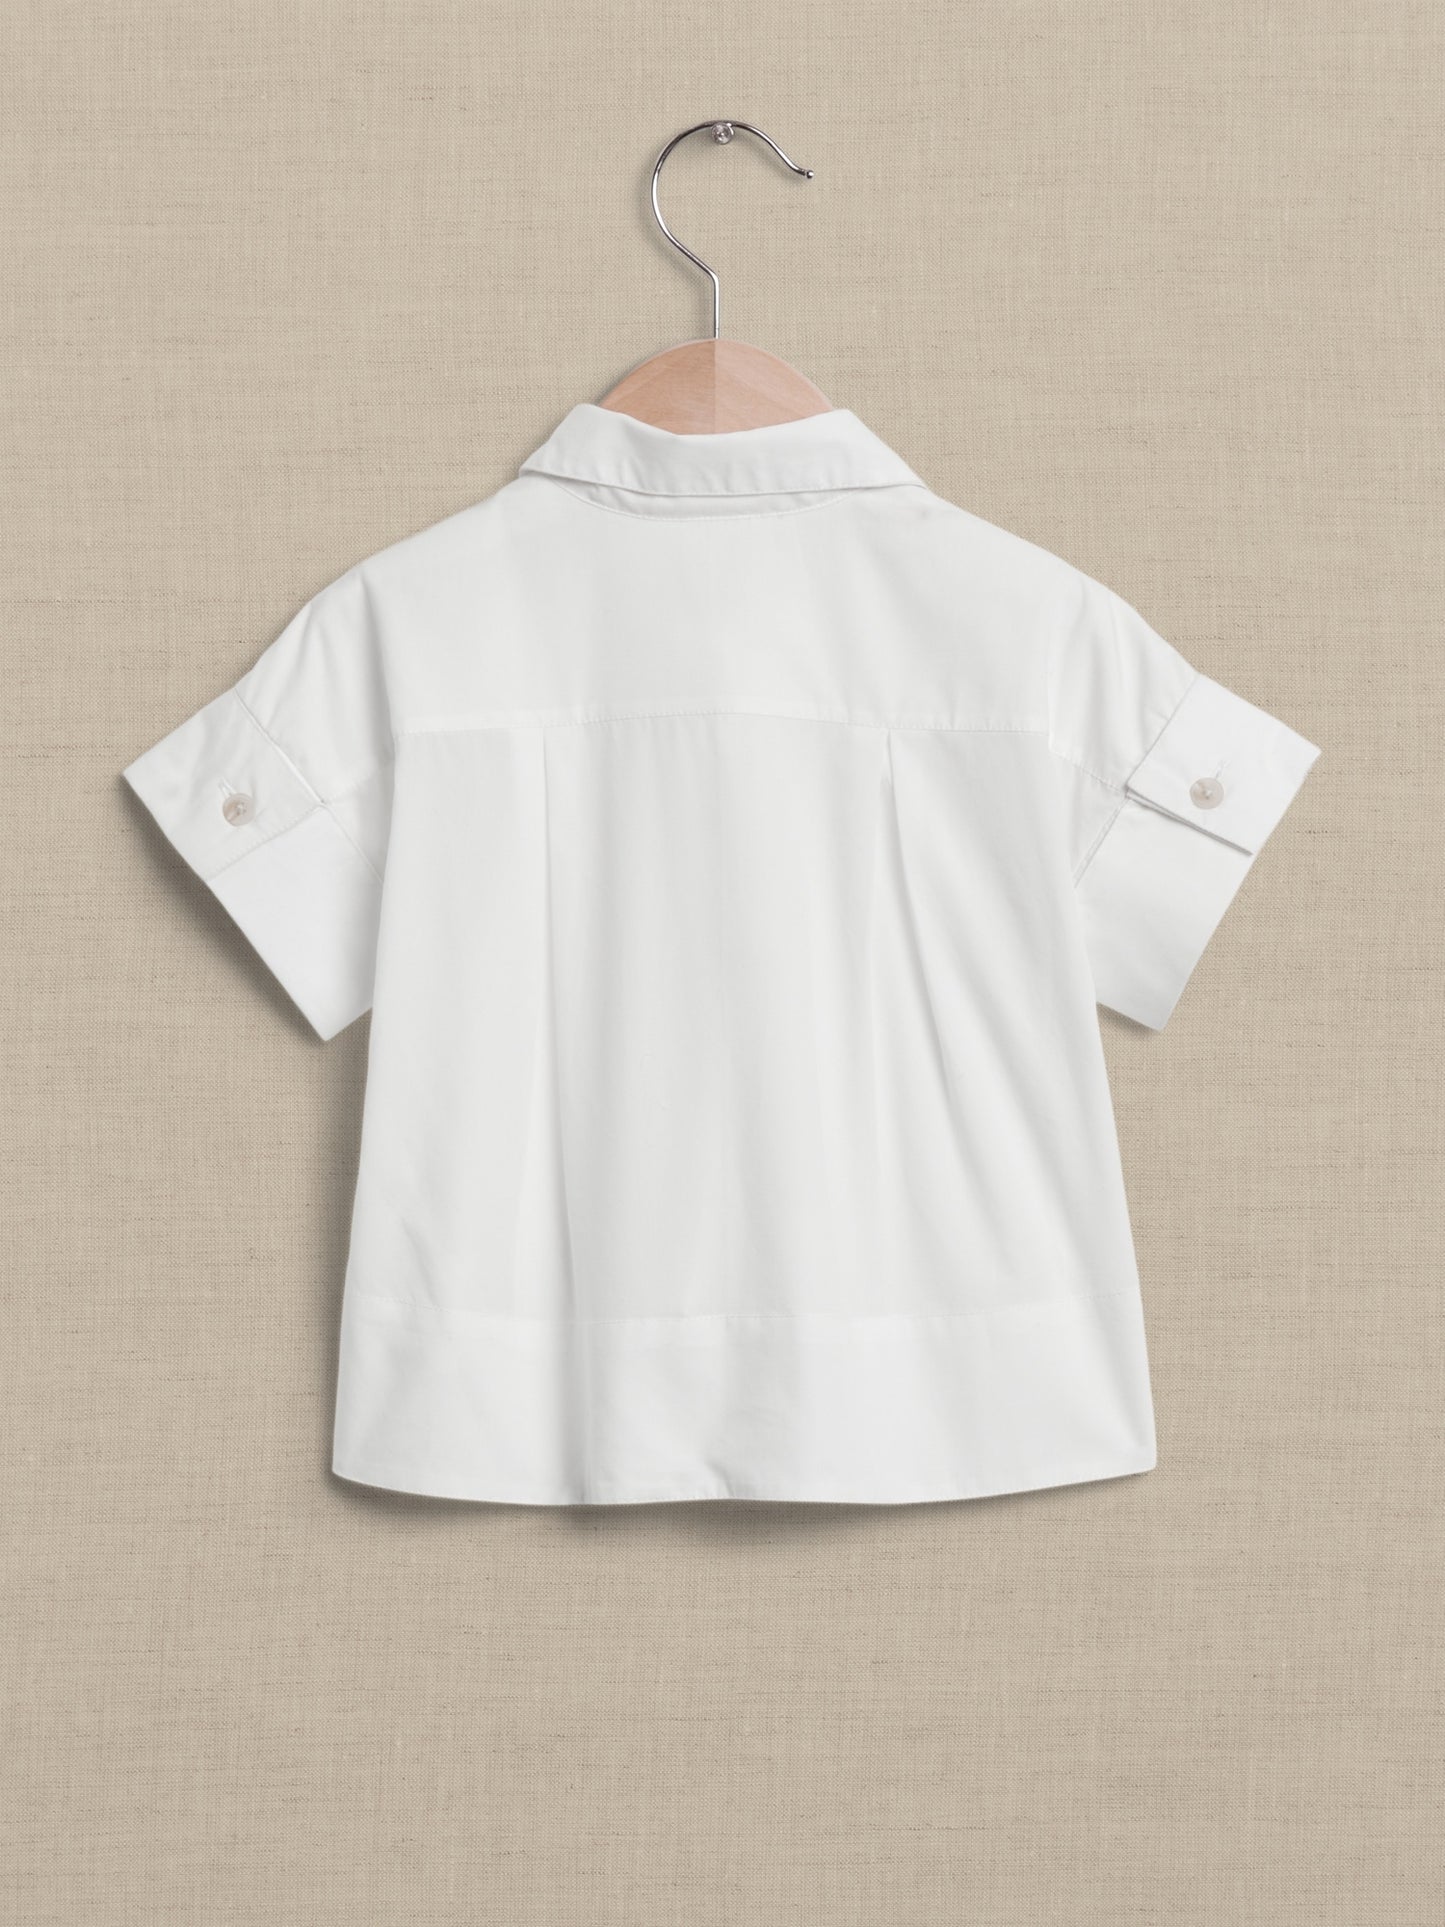 Laurel Popover Shirt for Baby + Toddler